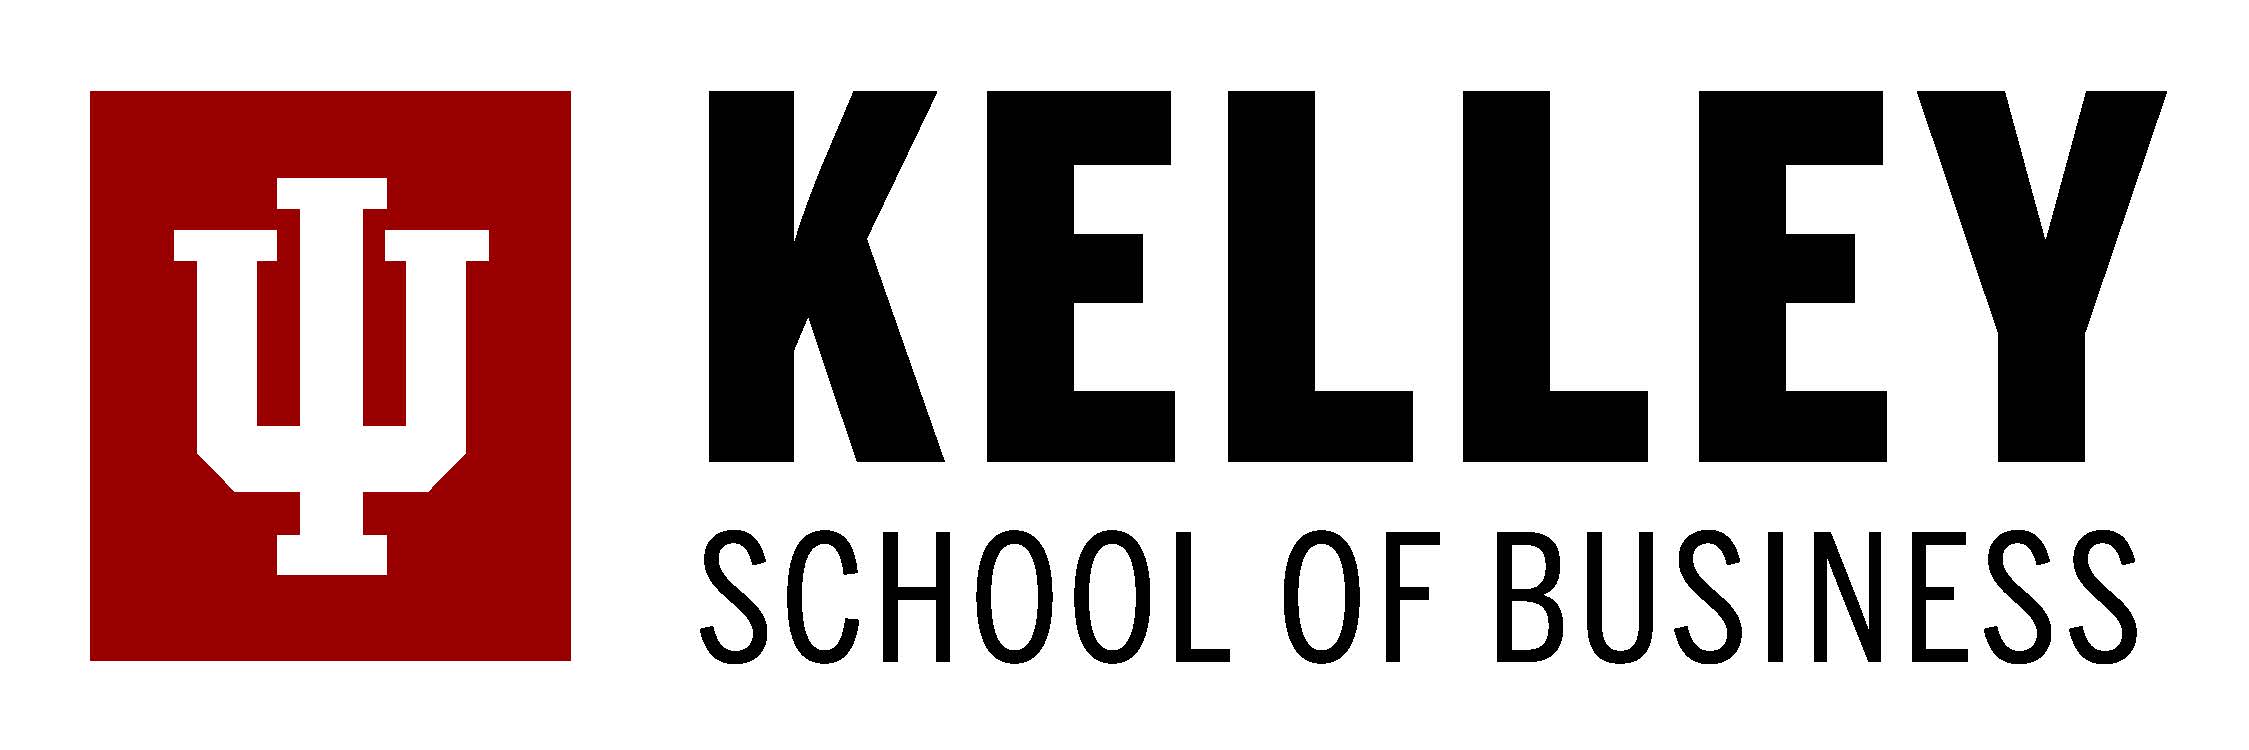 Indiana University Purdue University Indianapolis - Kelley School of Business logo